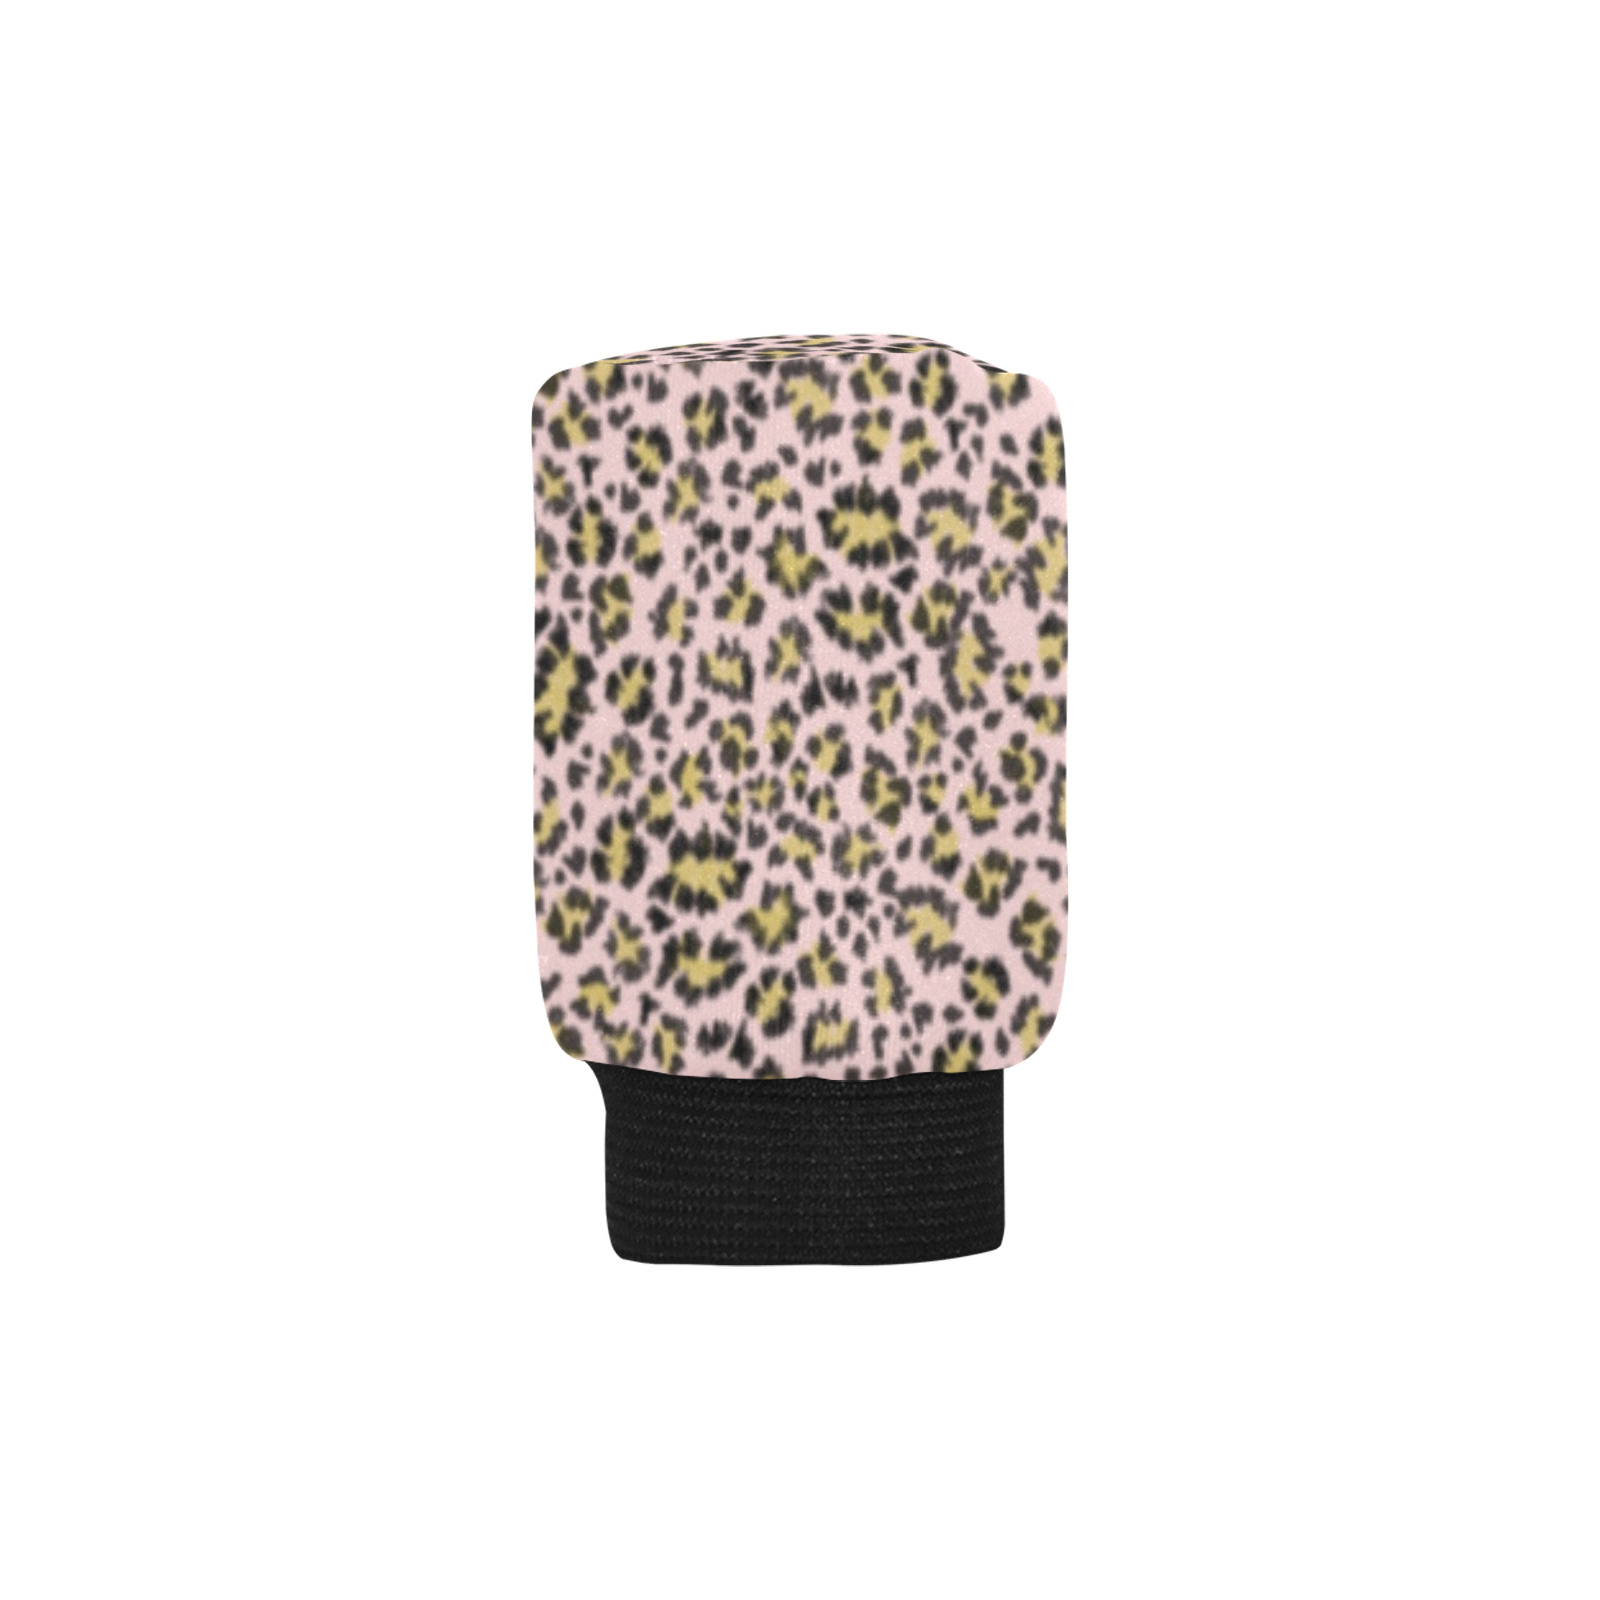 My pink leopard animal print dense50 Car Shift Knob Cover & Hand Brake Cover